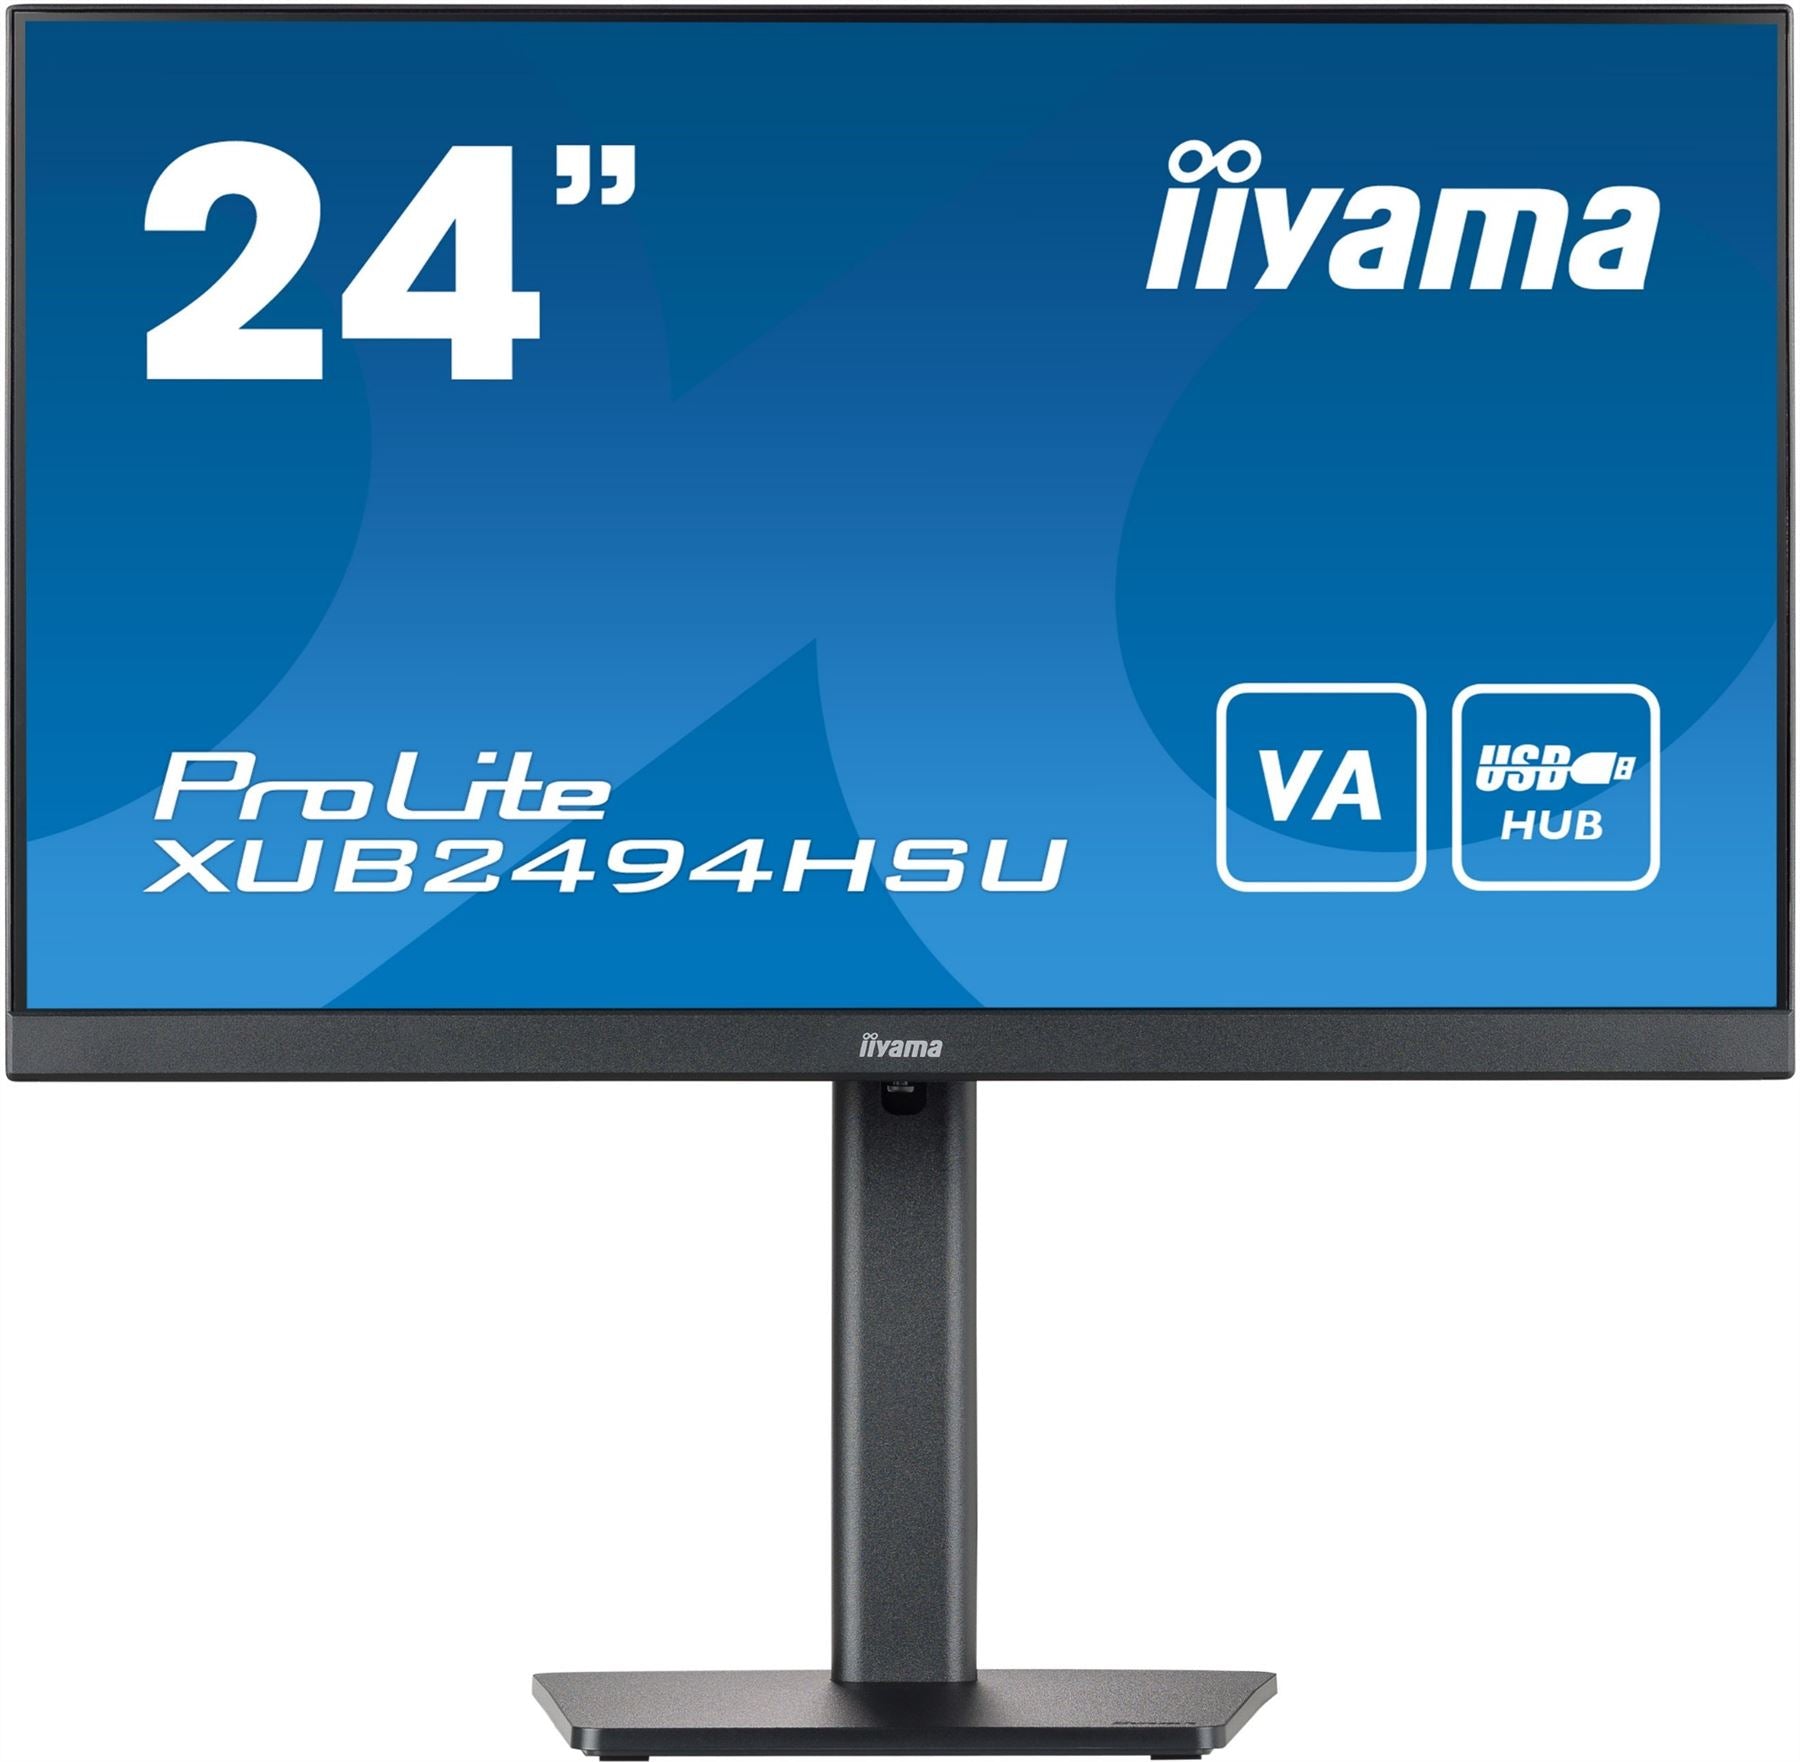 Monitors - Iiyama - Clove Technology